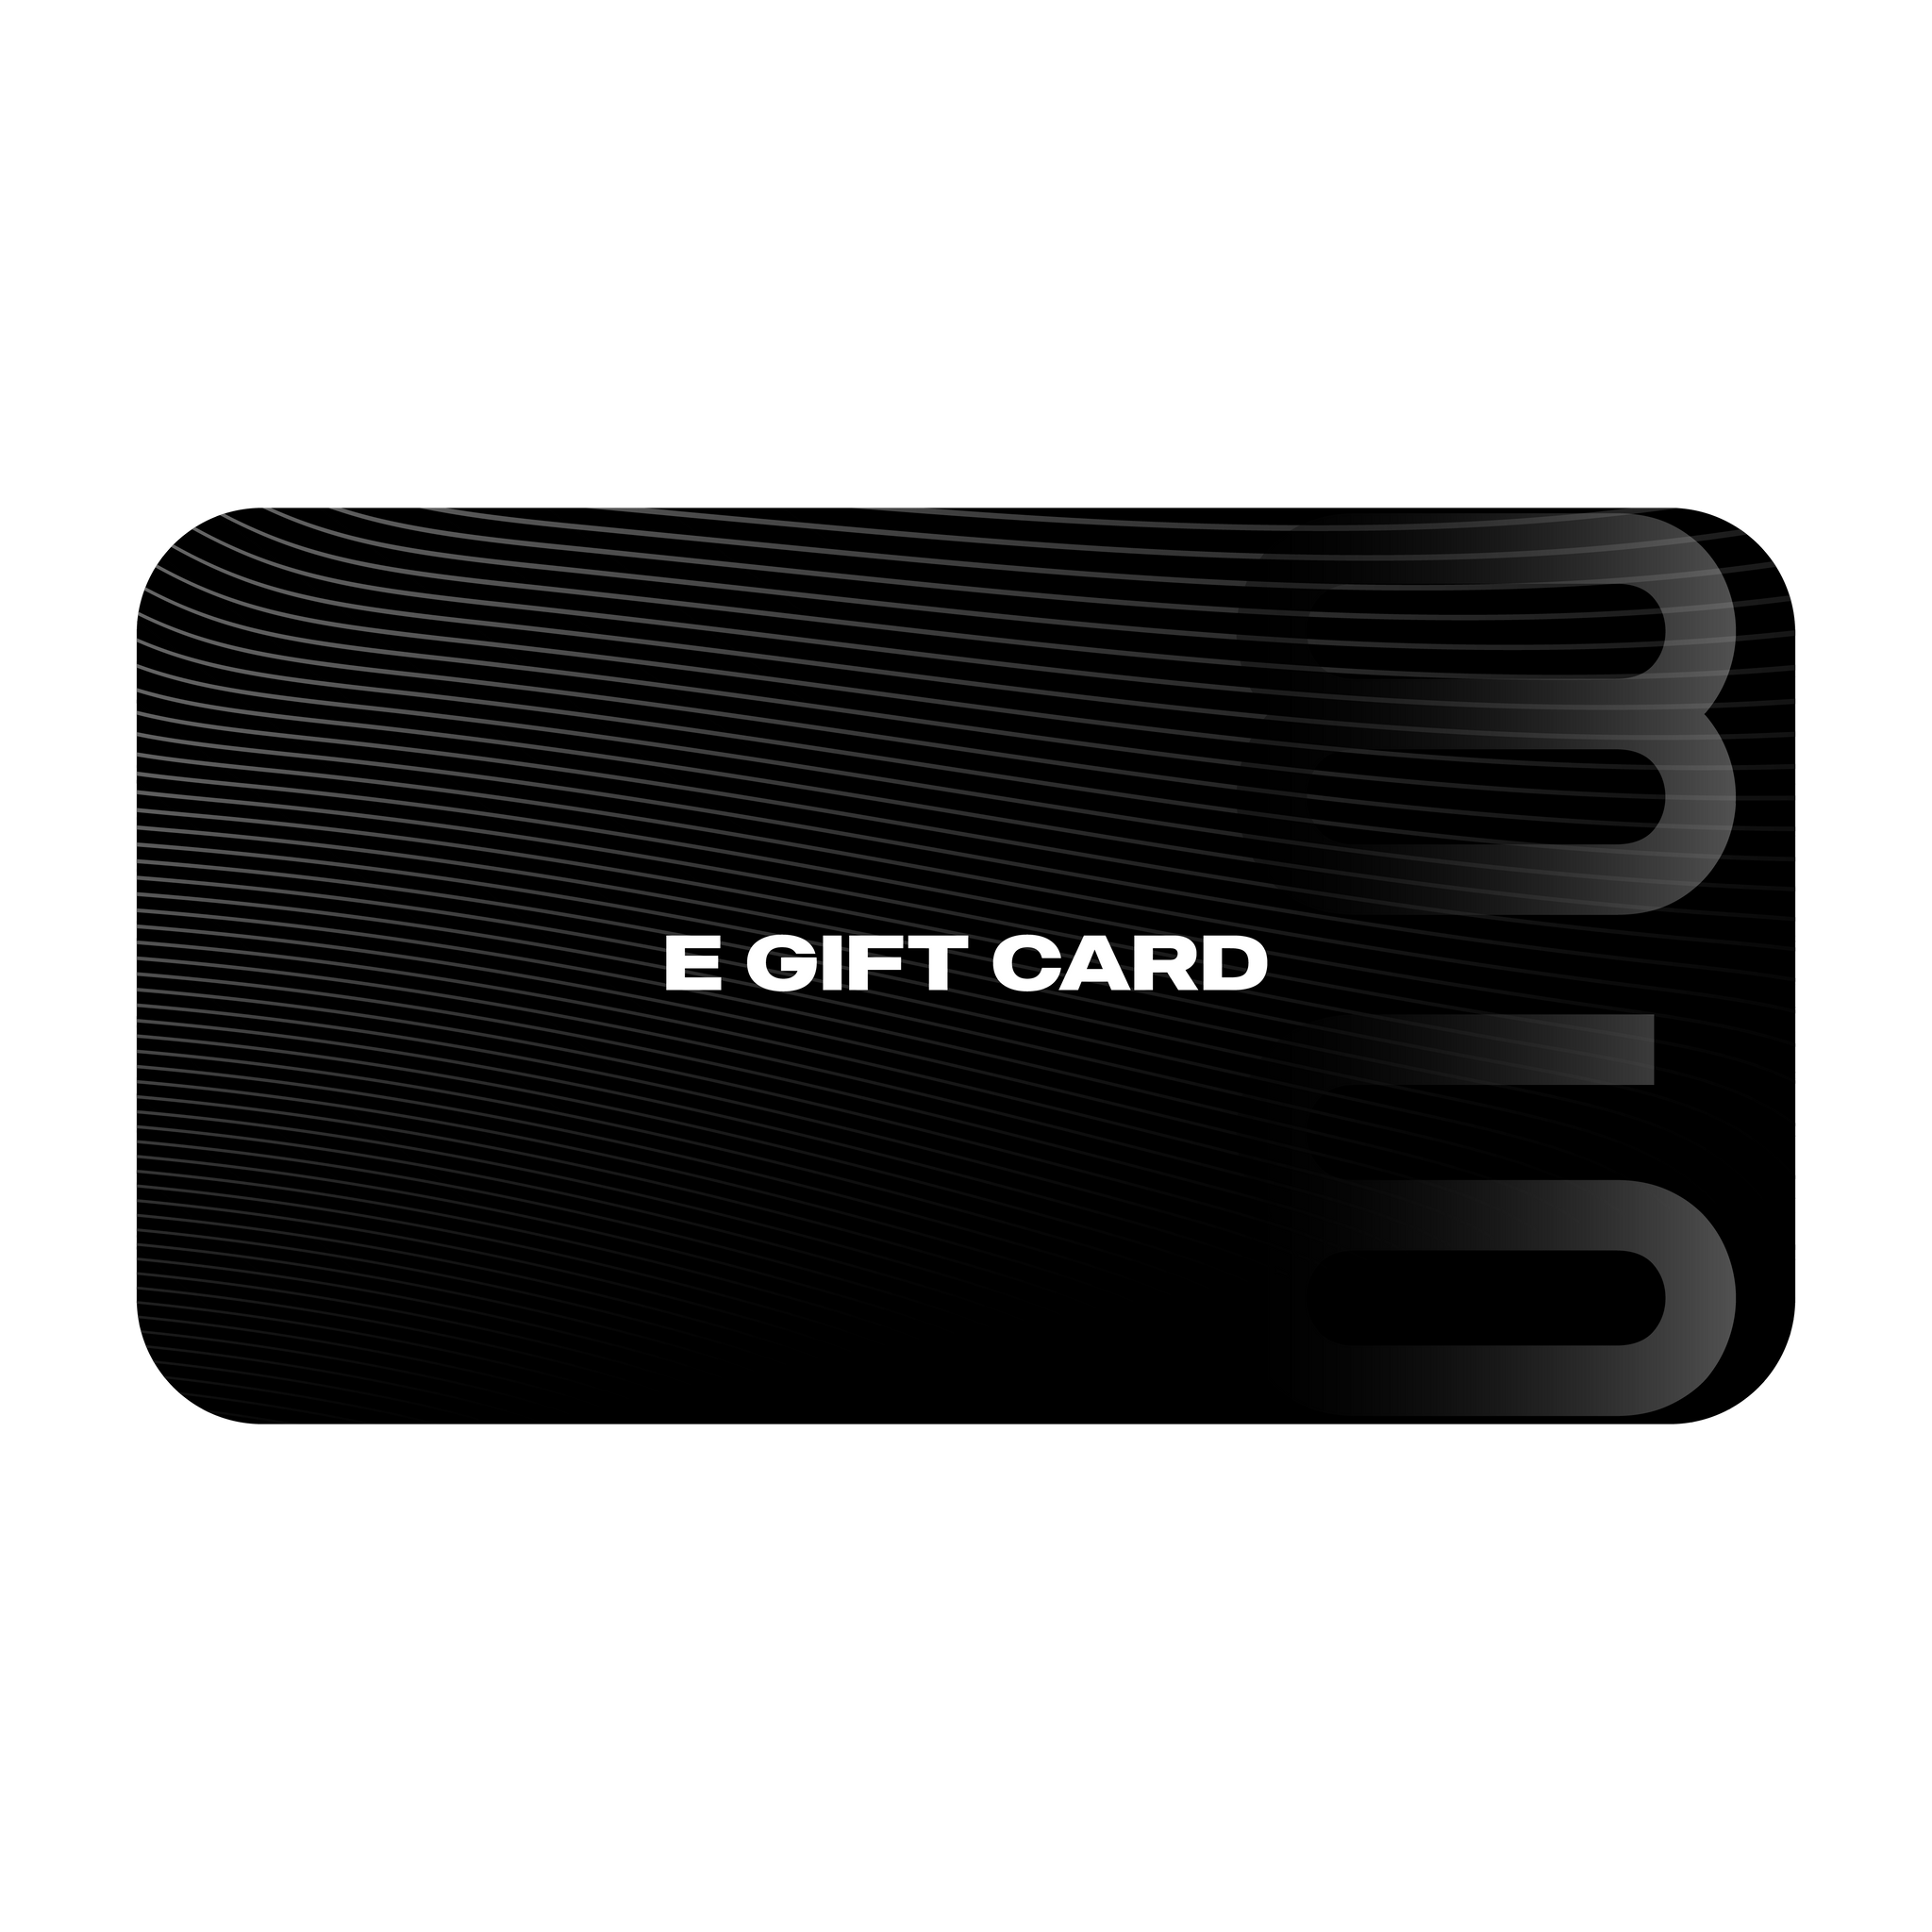 E gift card